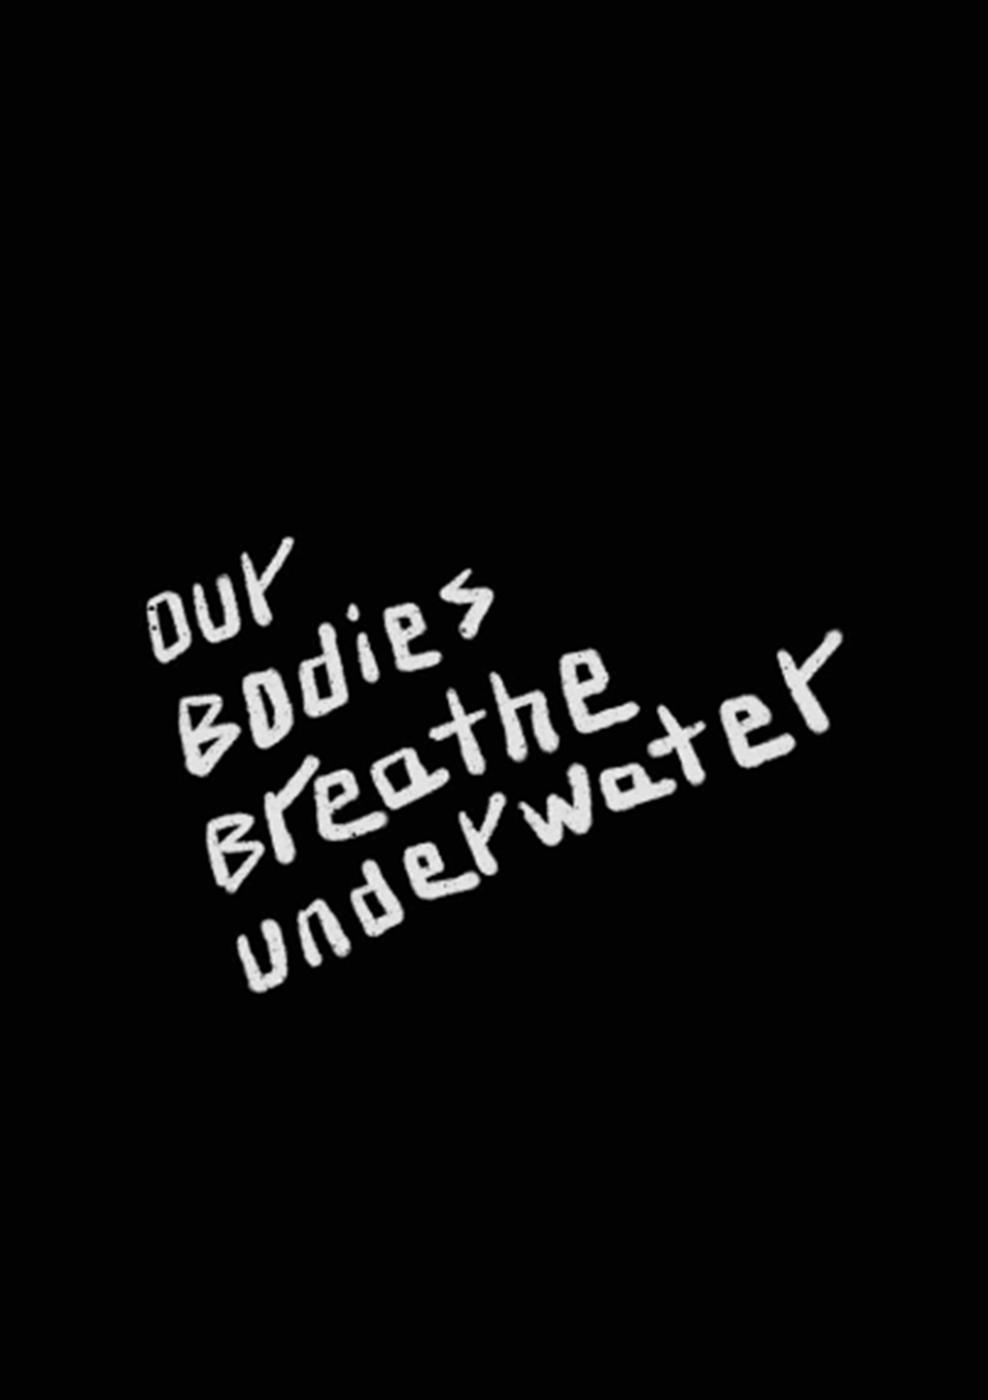 Our bodies Breath underwater. CIC, Egypt